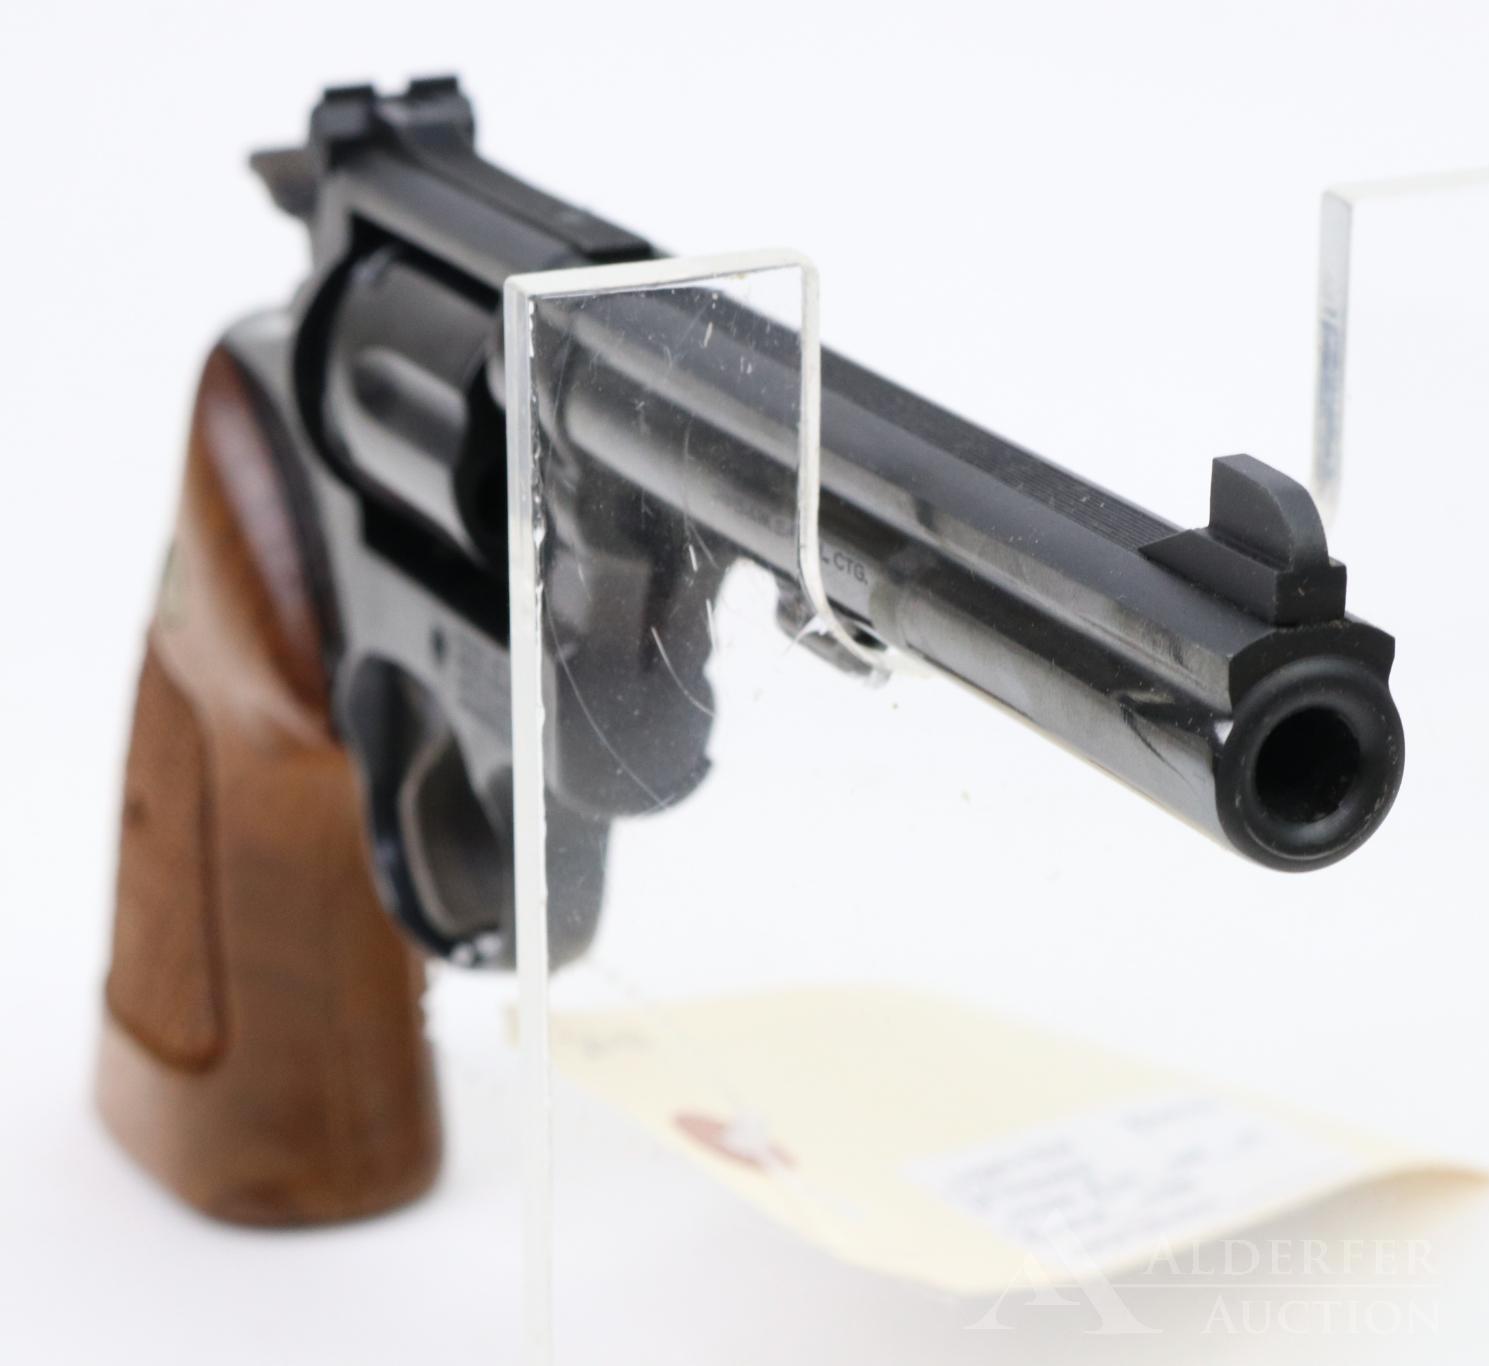 Smith & Wesson 14-3 single action revolver.